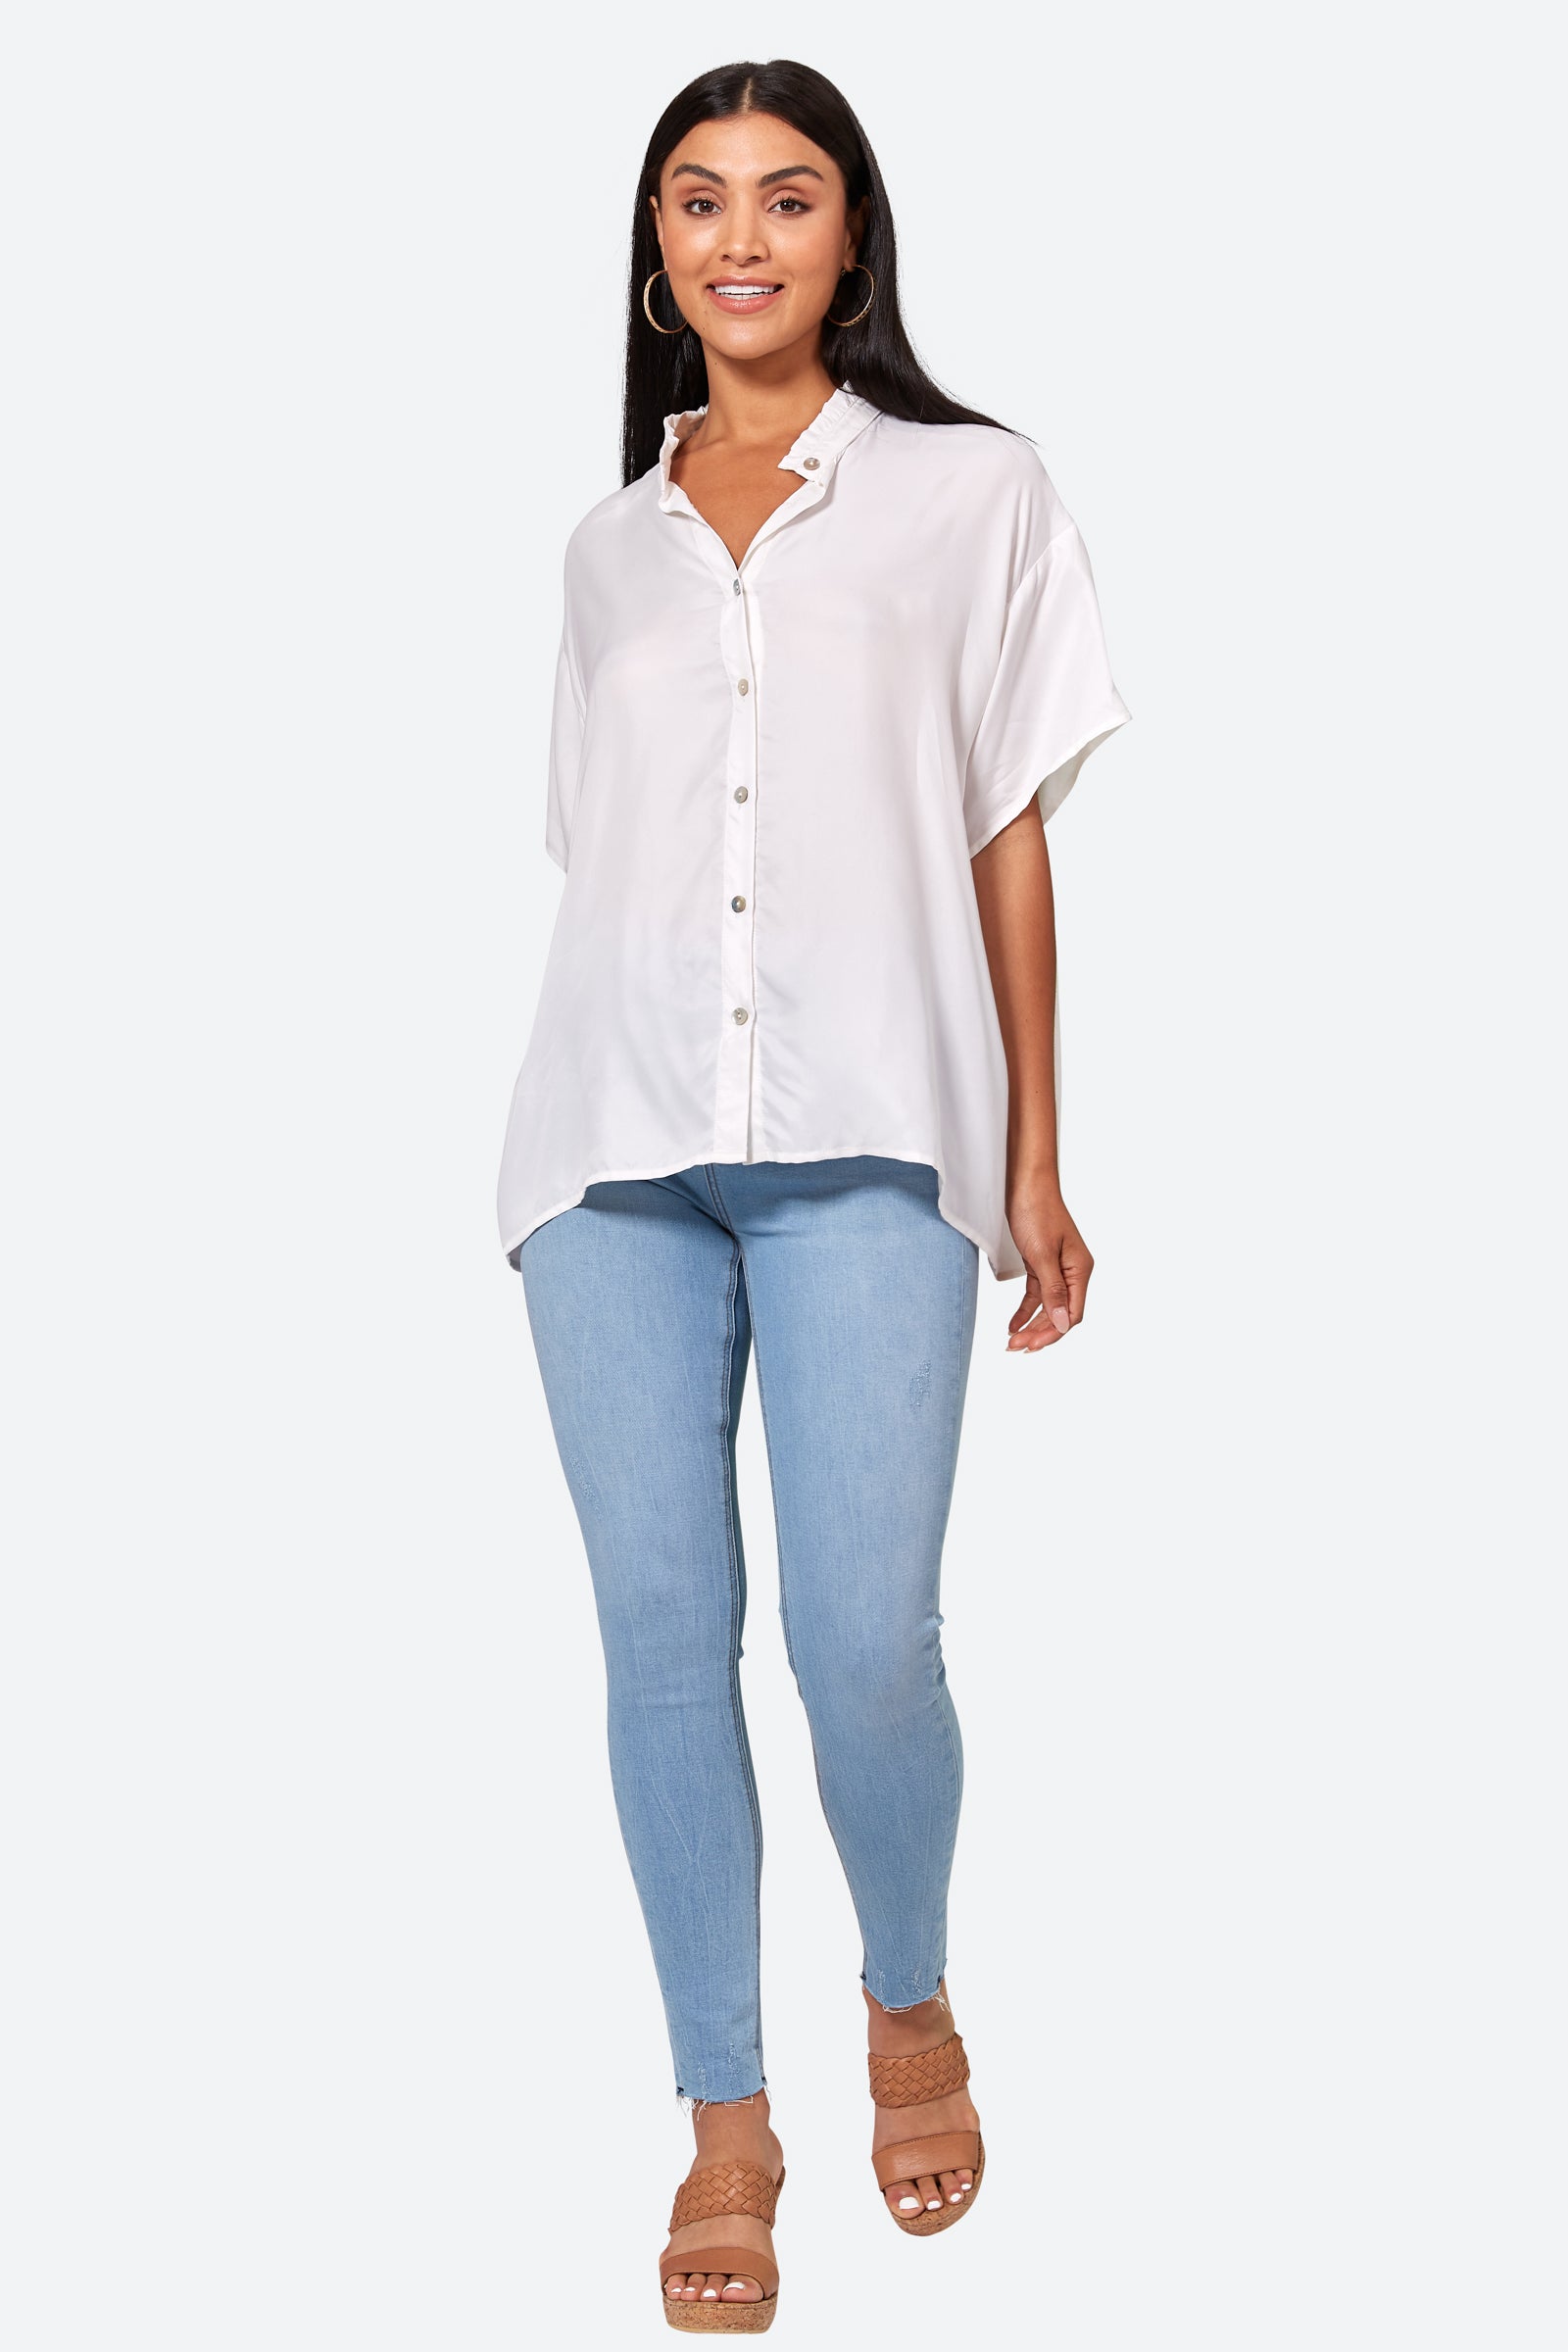 Elixir Shirt - Blanc - eb&ive Clothing - Shirt S/S Cupro